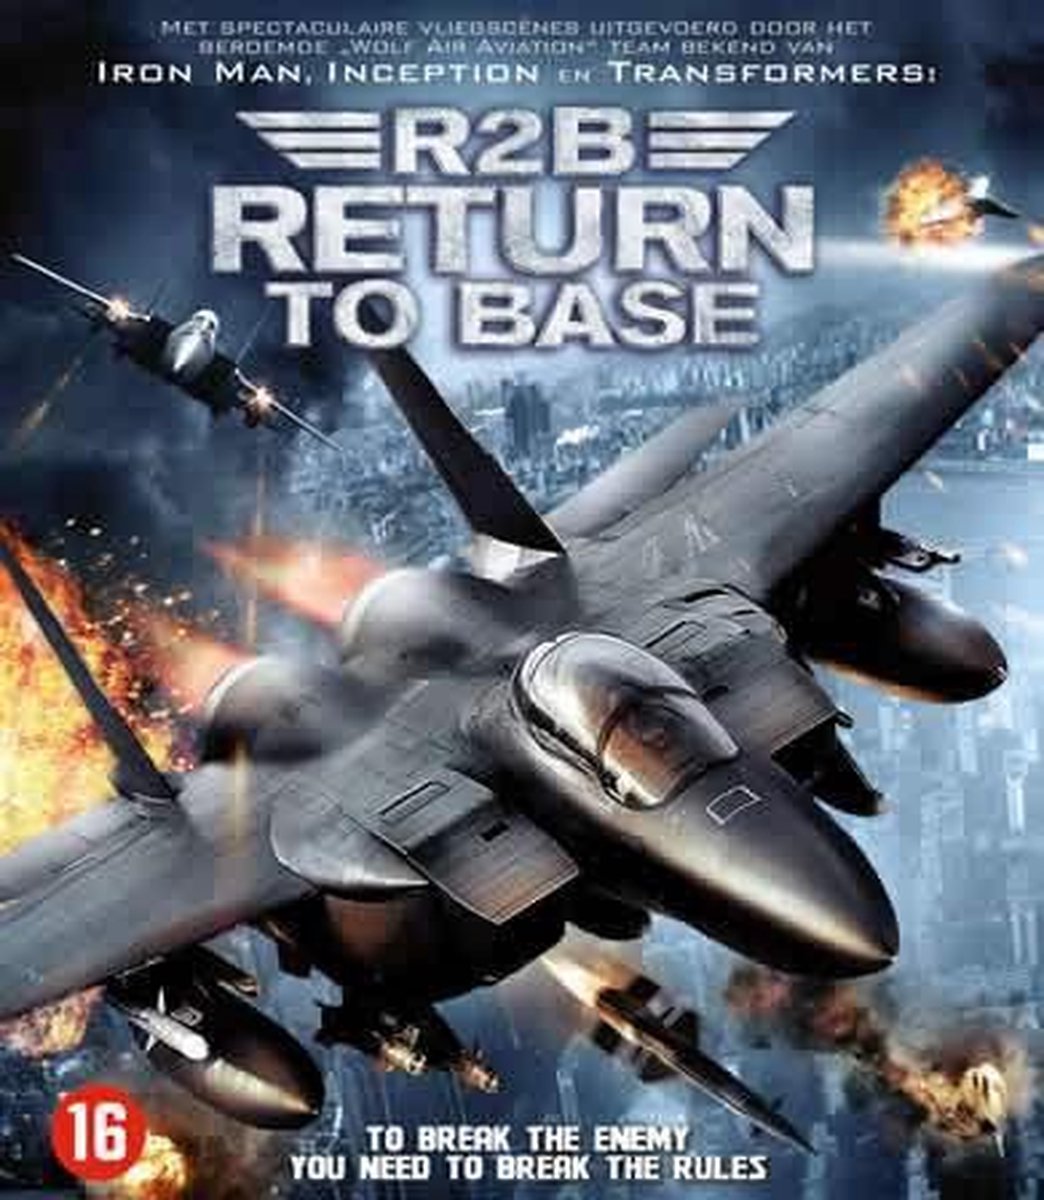 R2B - Return to base